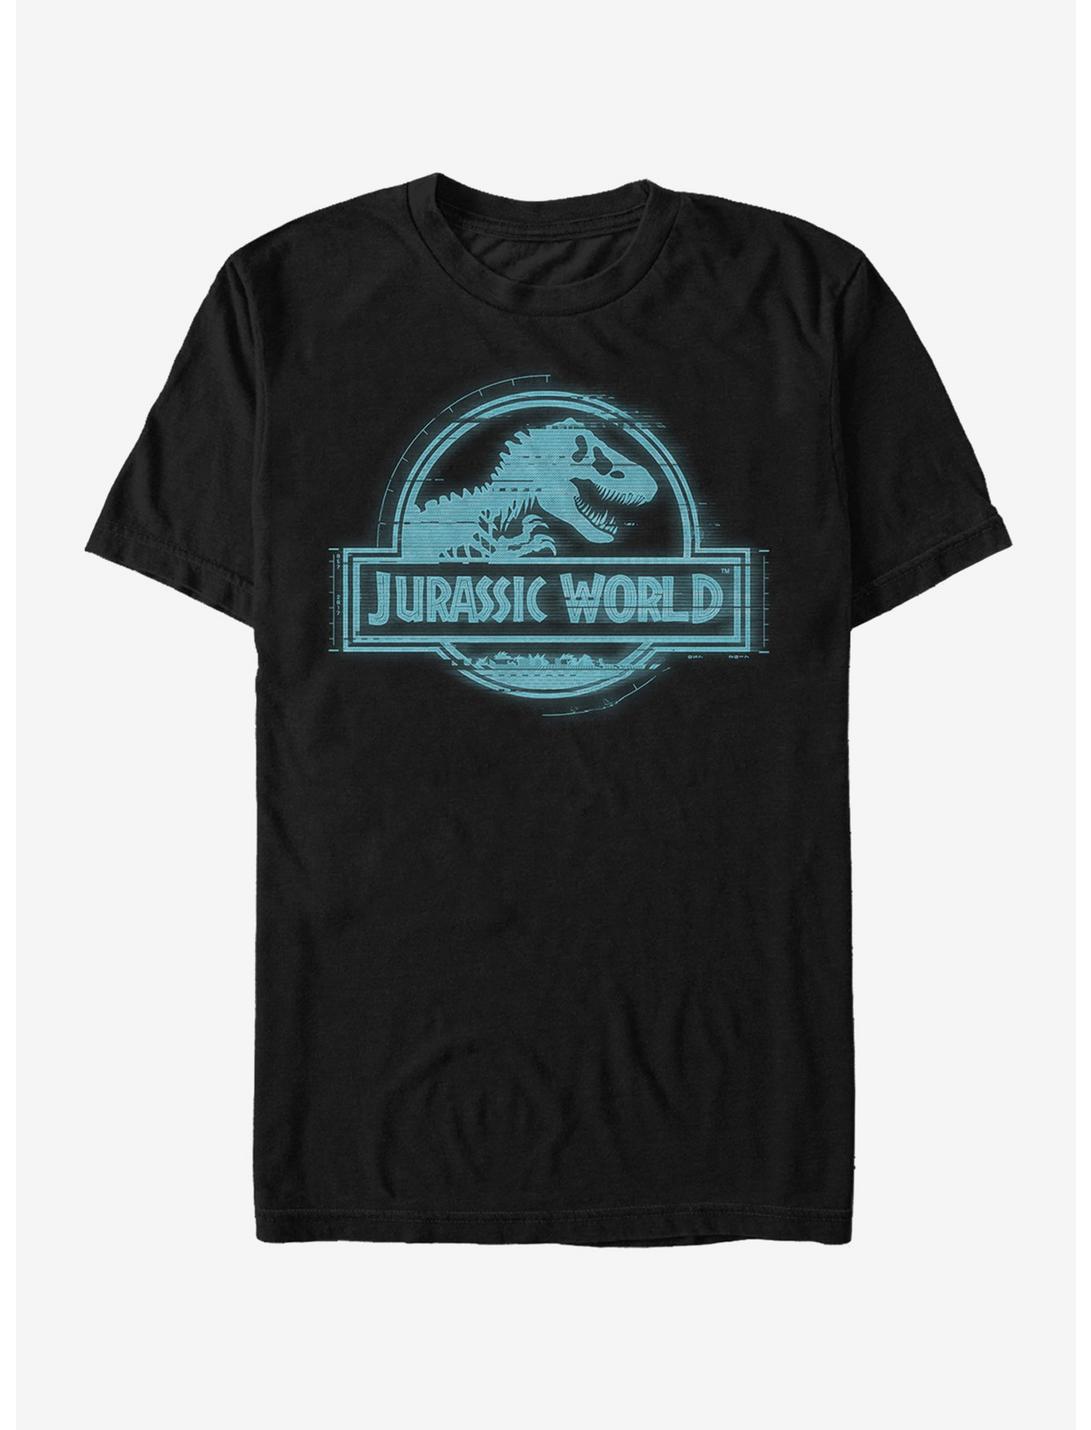 Plus Size Jurassic World Glitch Logo T-Shirt, BLACK, hi-res